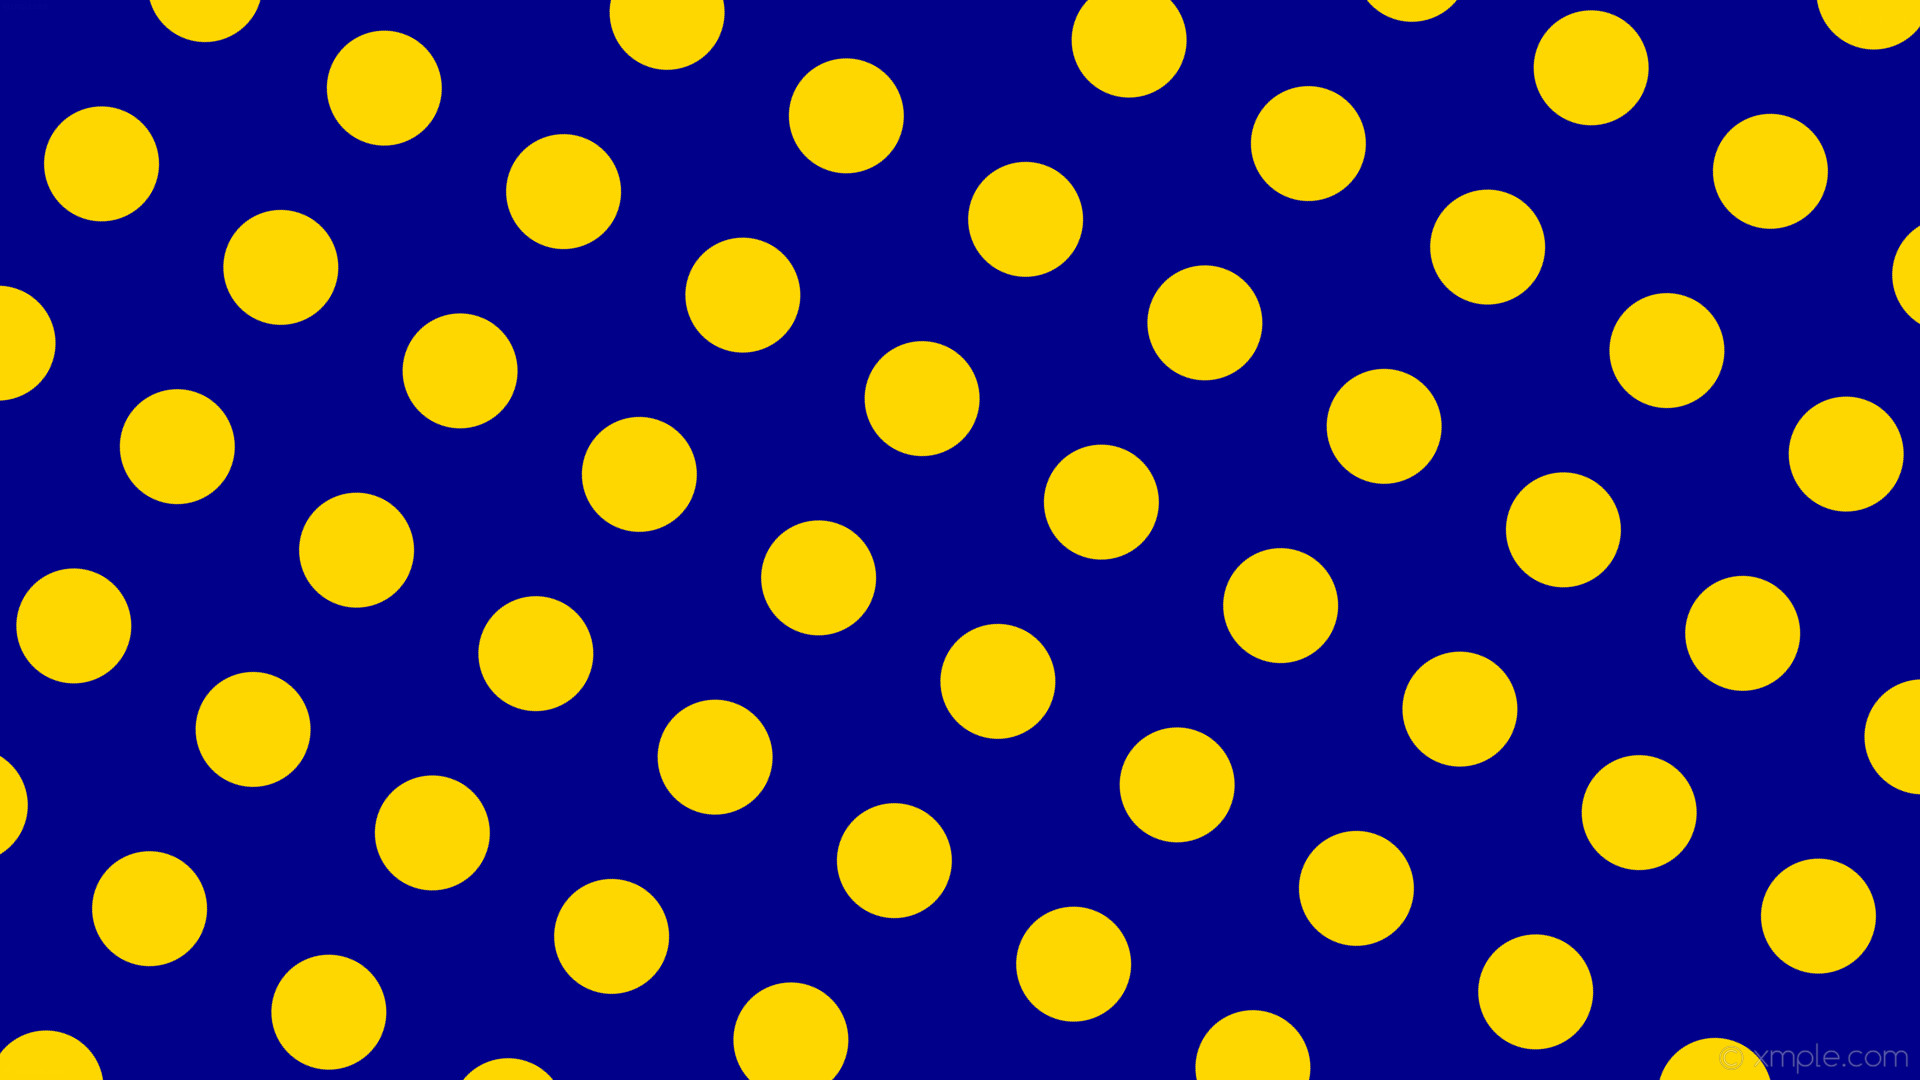 Wallpaper yellow spots blue polka dots dark blue gold b #ffd700 60 115px